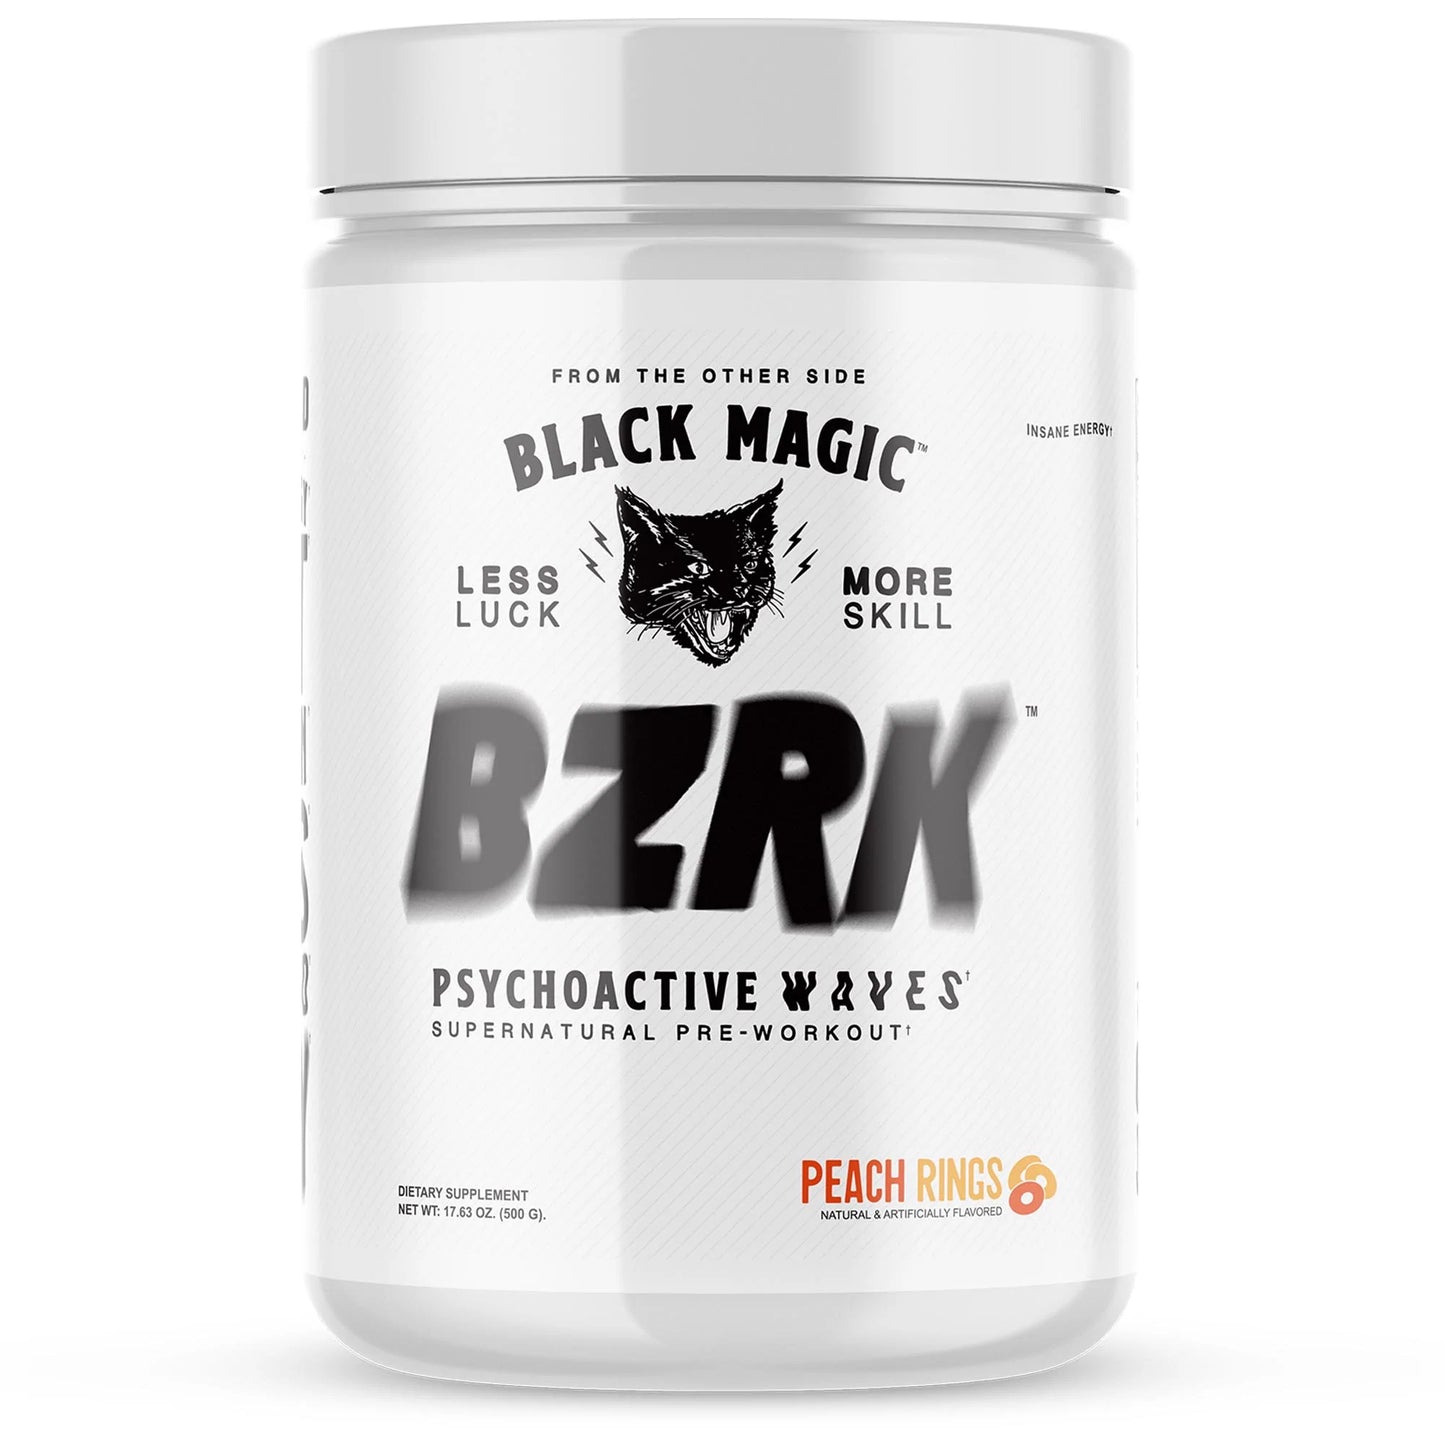 Black Magic Bzrk Peach Rings